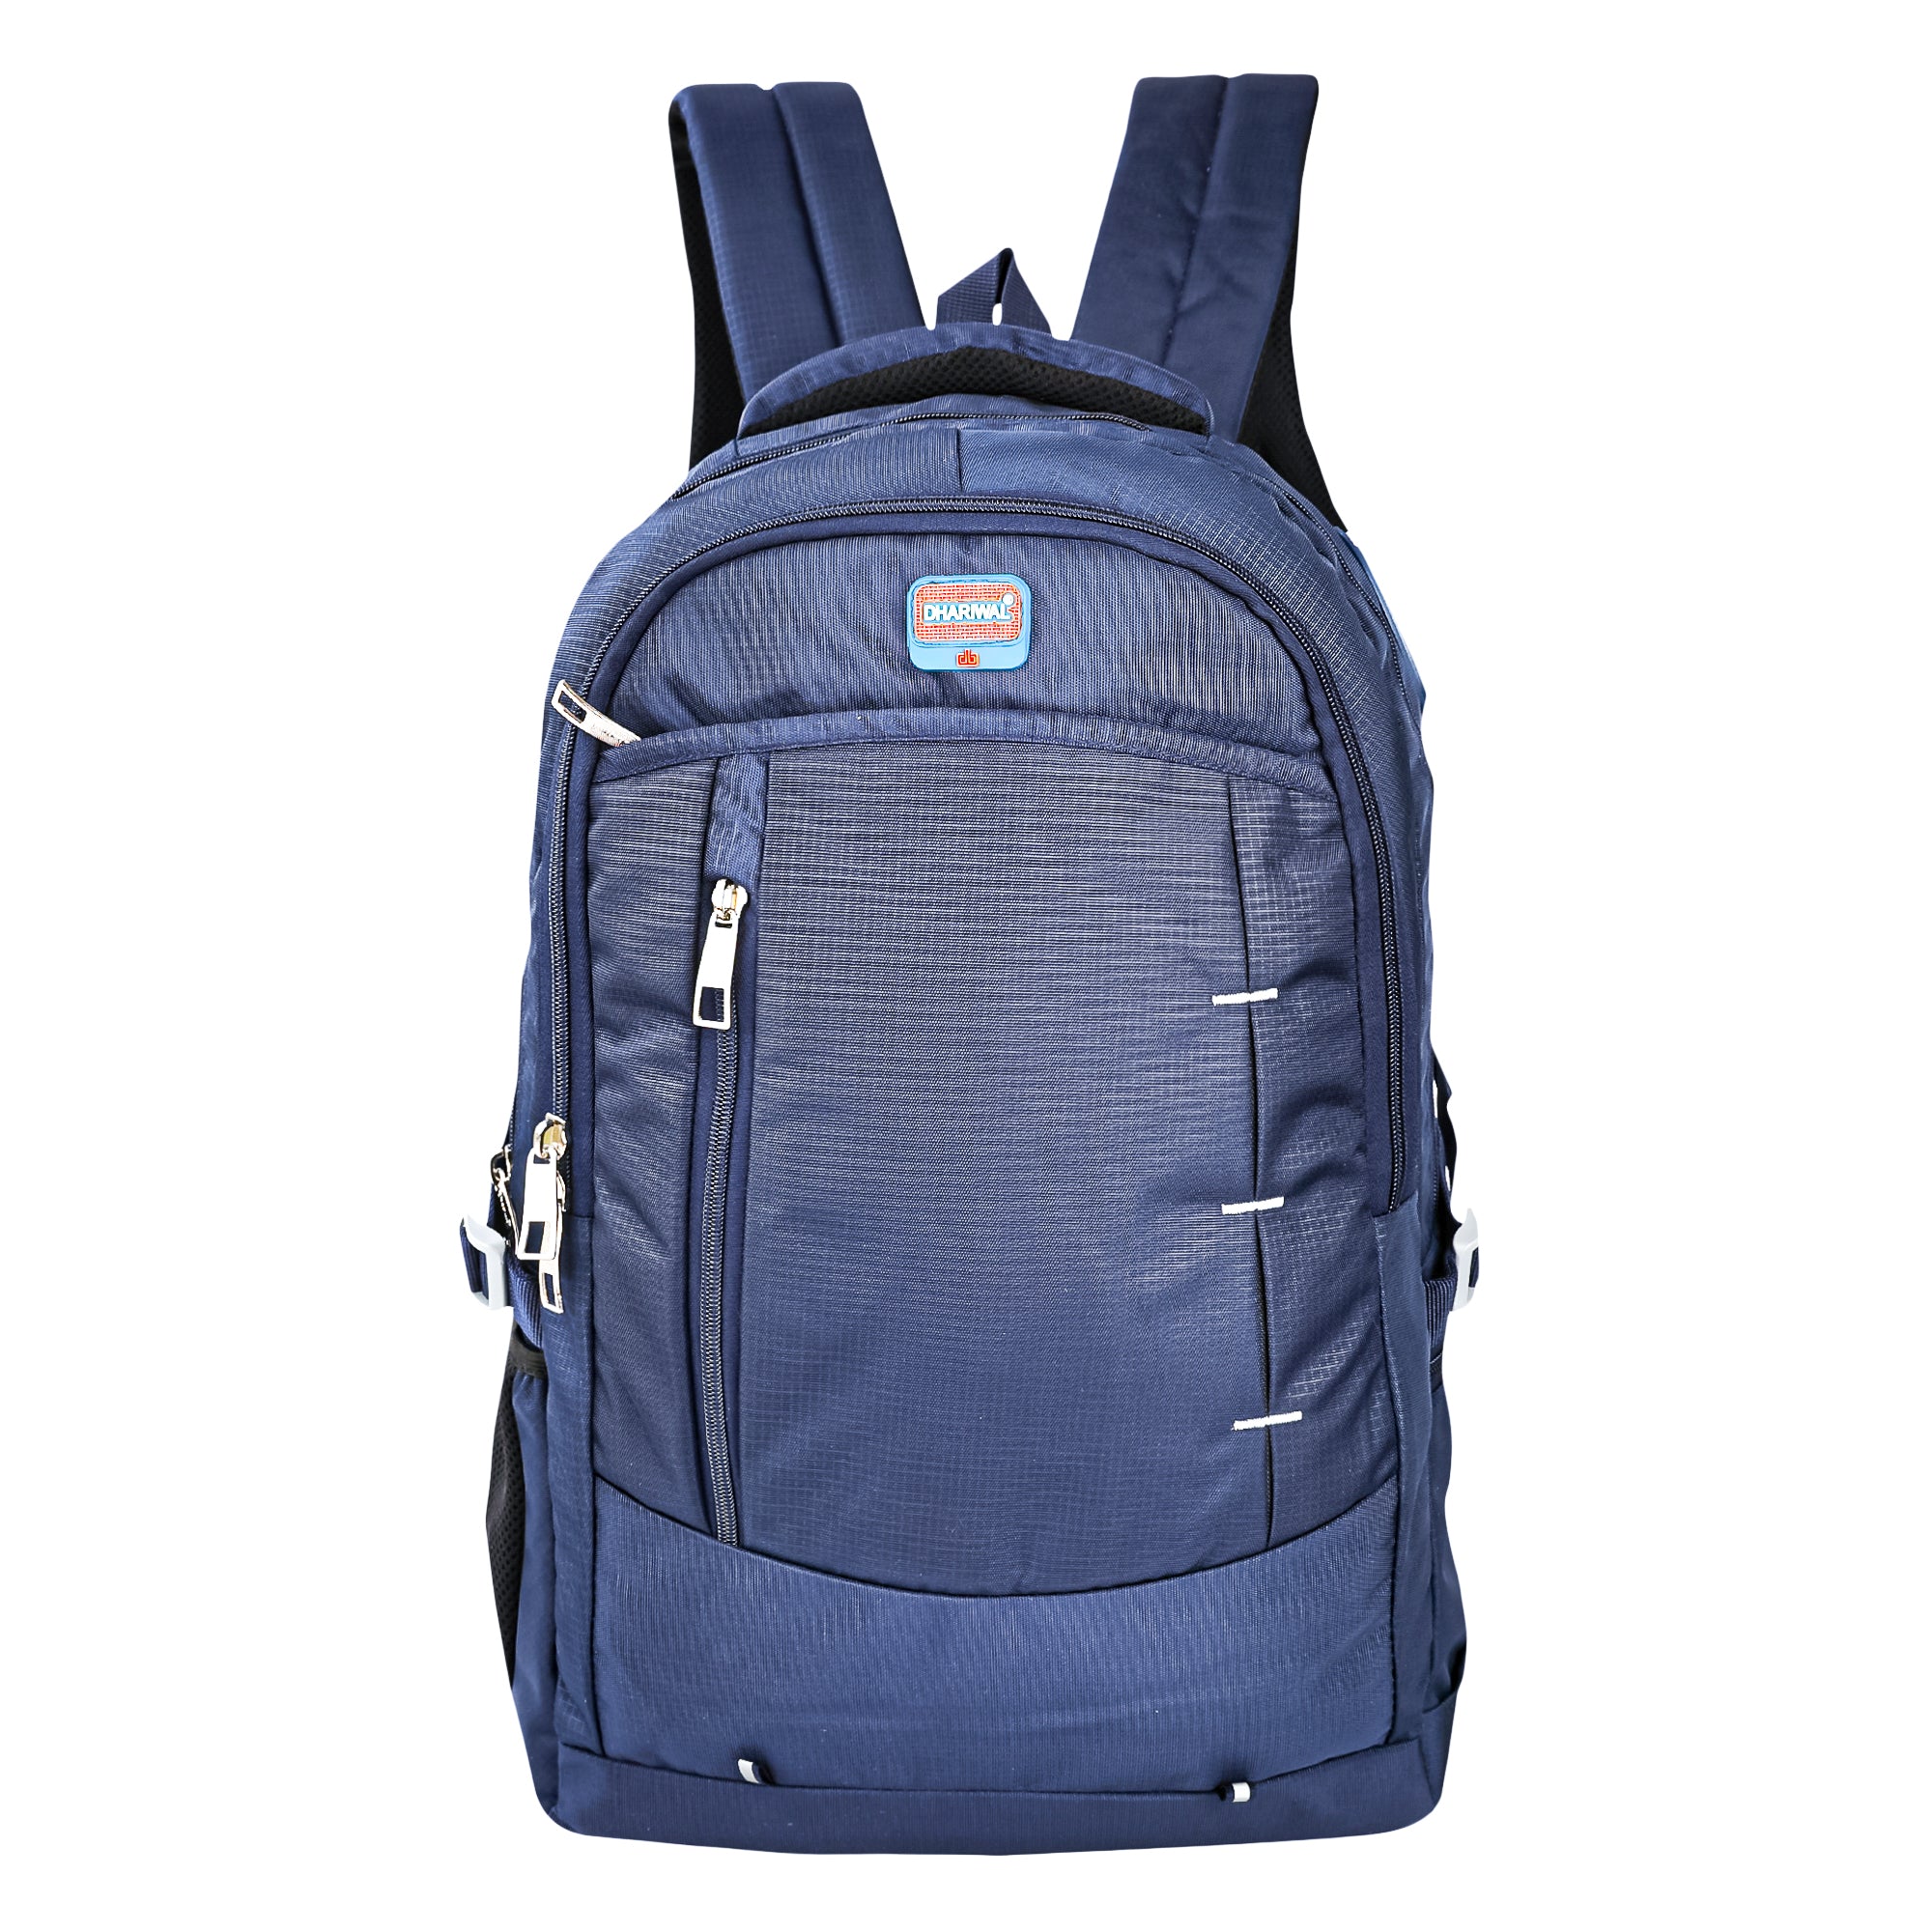 Dhariwal bags Dhariwal bag Water Resistant Dual Compartment Backpack 39L  BP-209 39L Backpack 39 L Backpack TEAL - Price in India | Flipkart.com